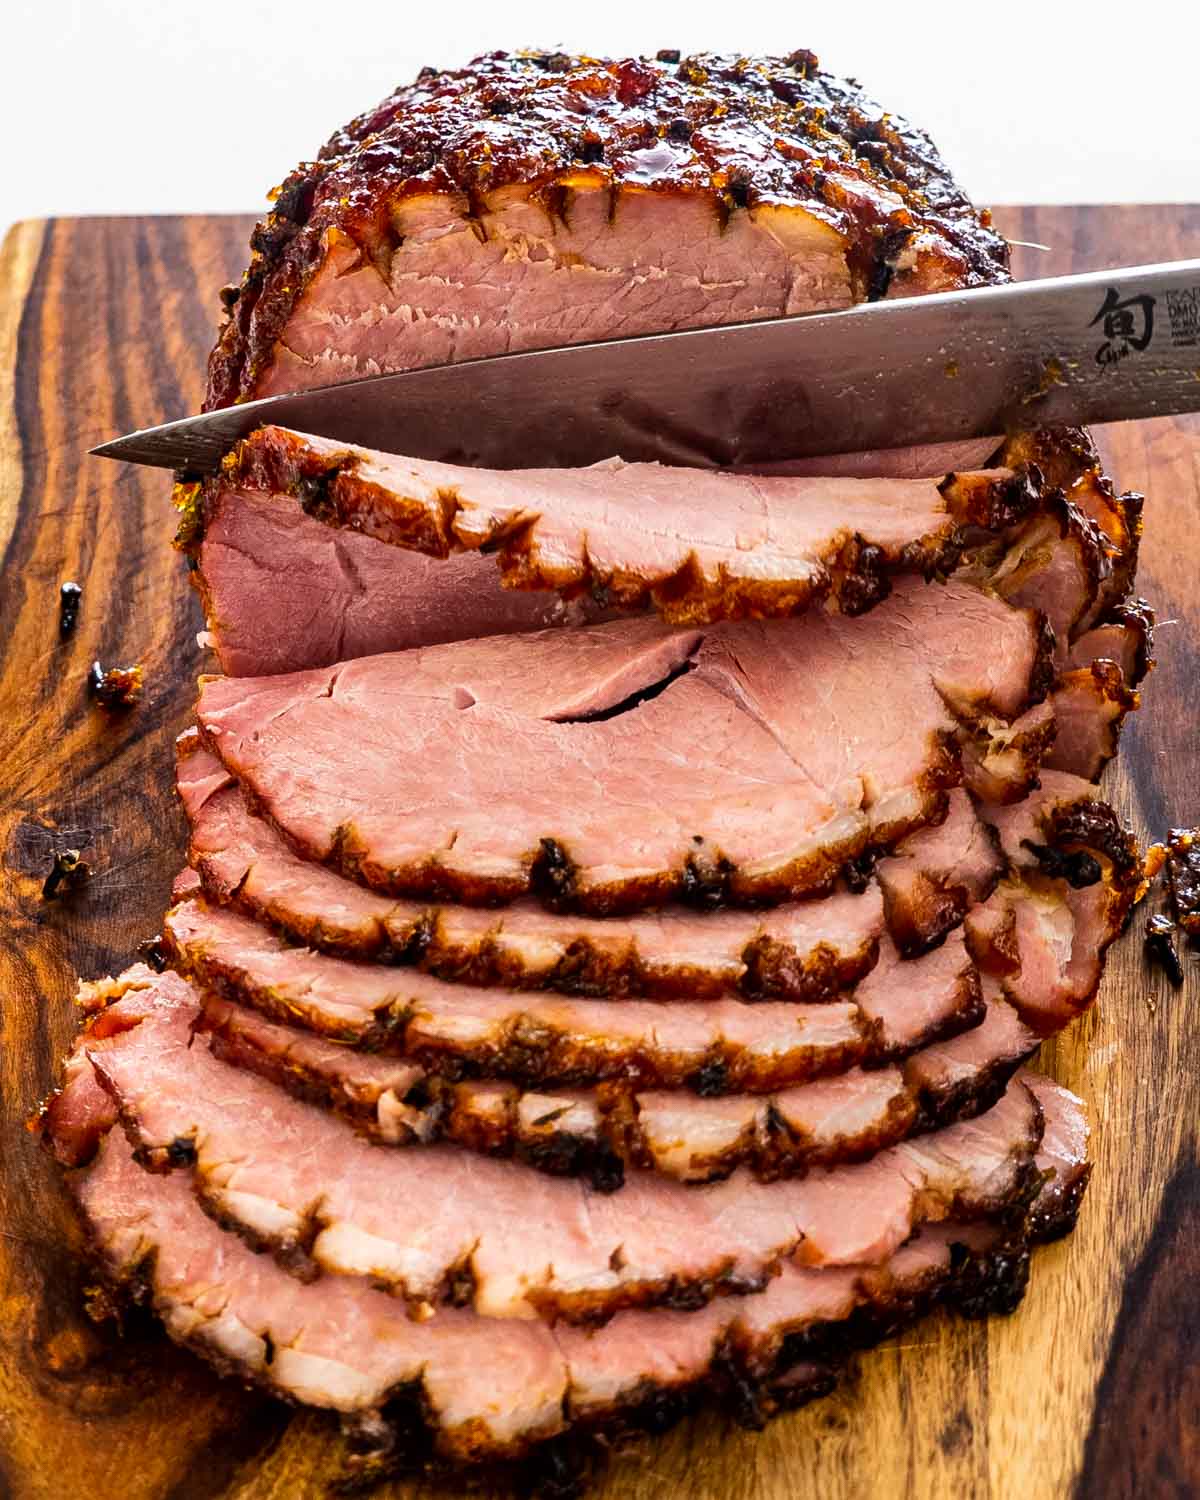 sliced up bourbon glazed baked ham on a cutting board.